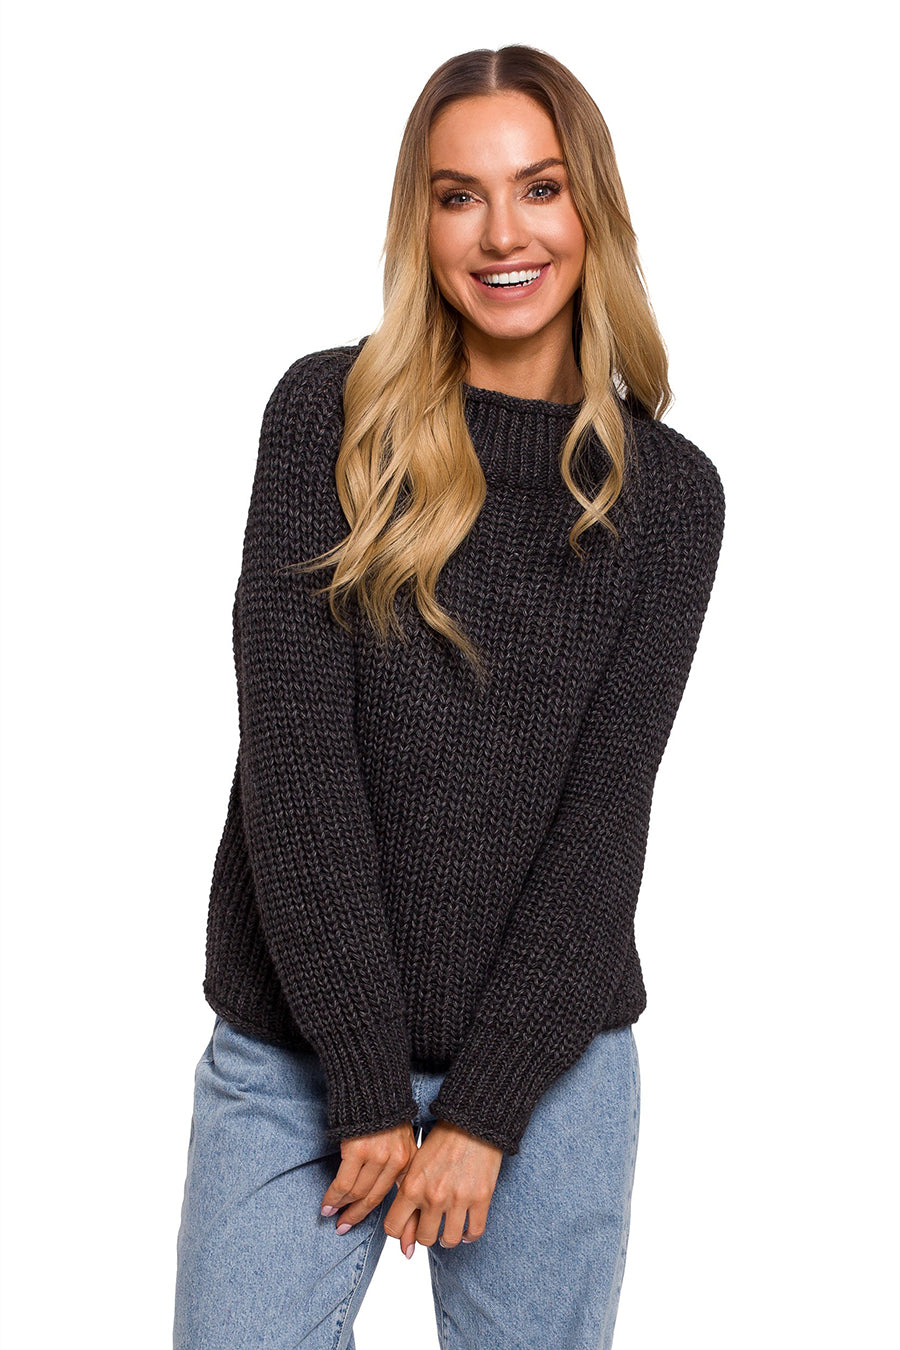 Дамски пуловер Audelia, Сив 3